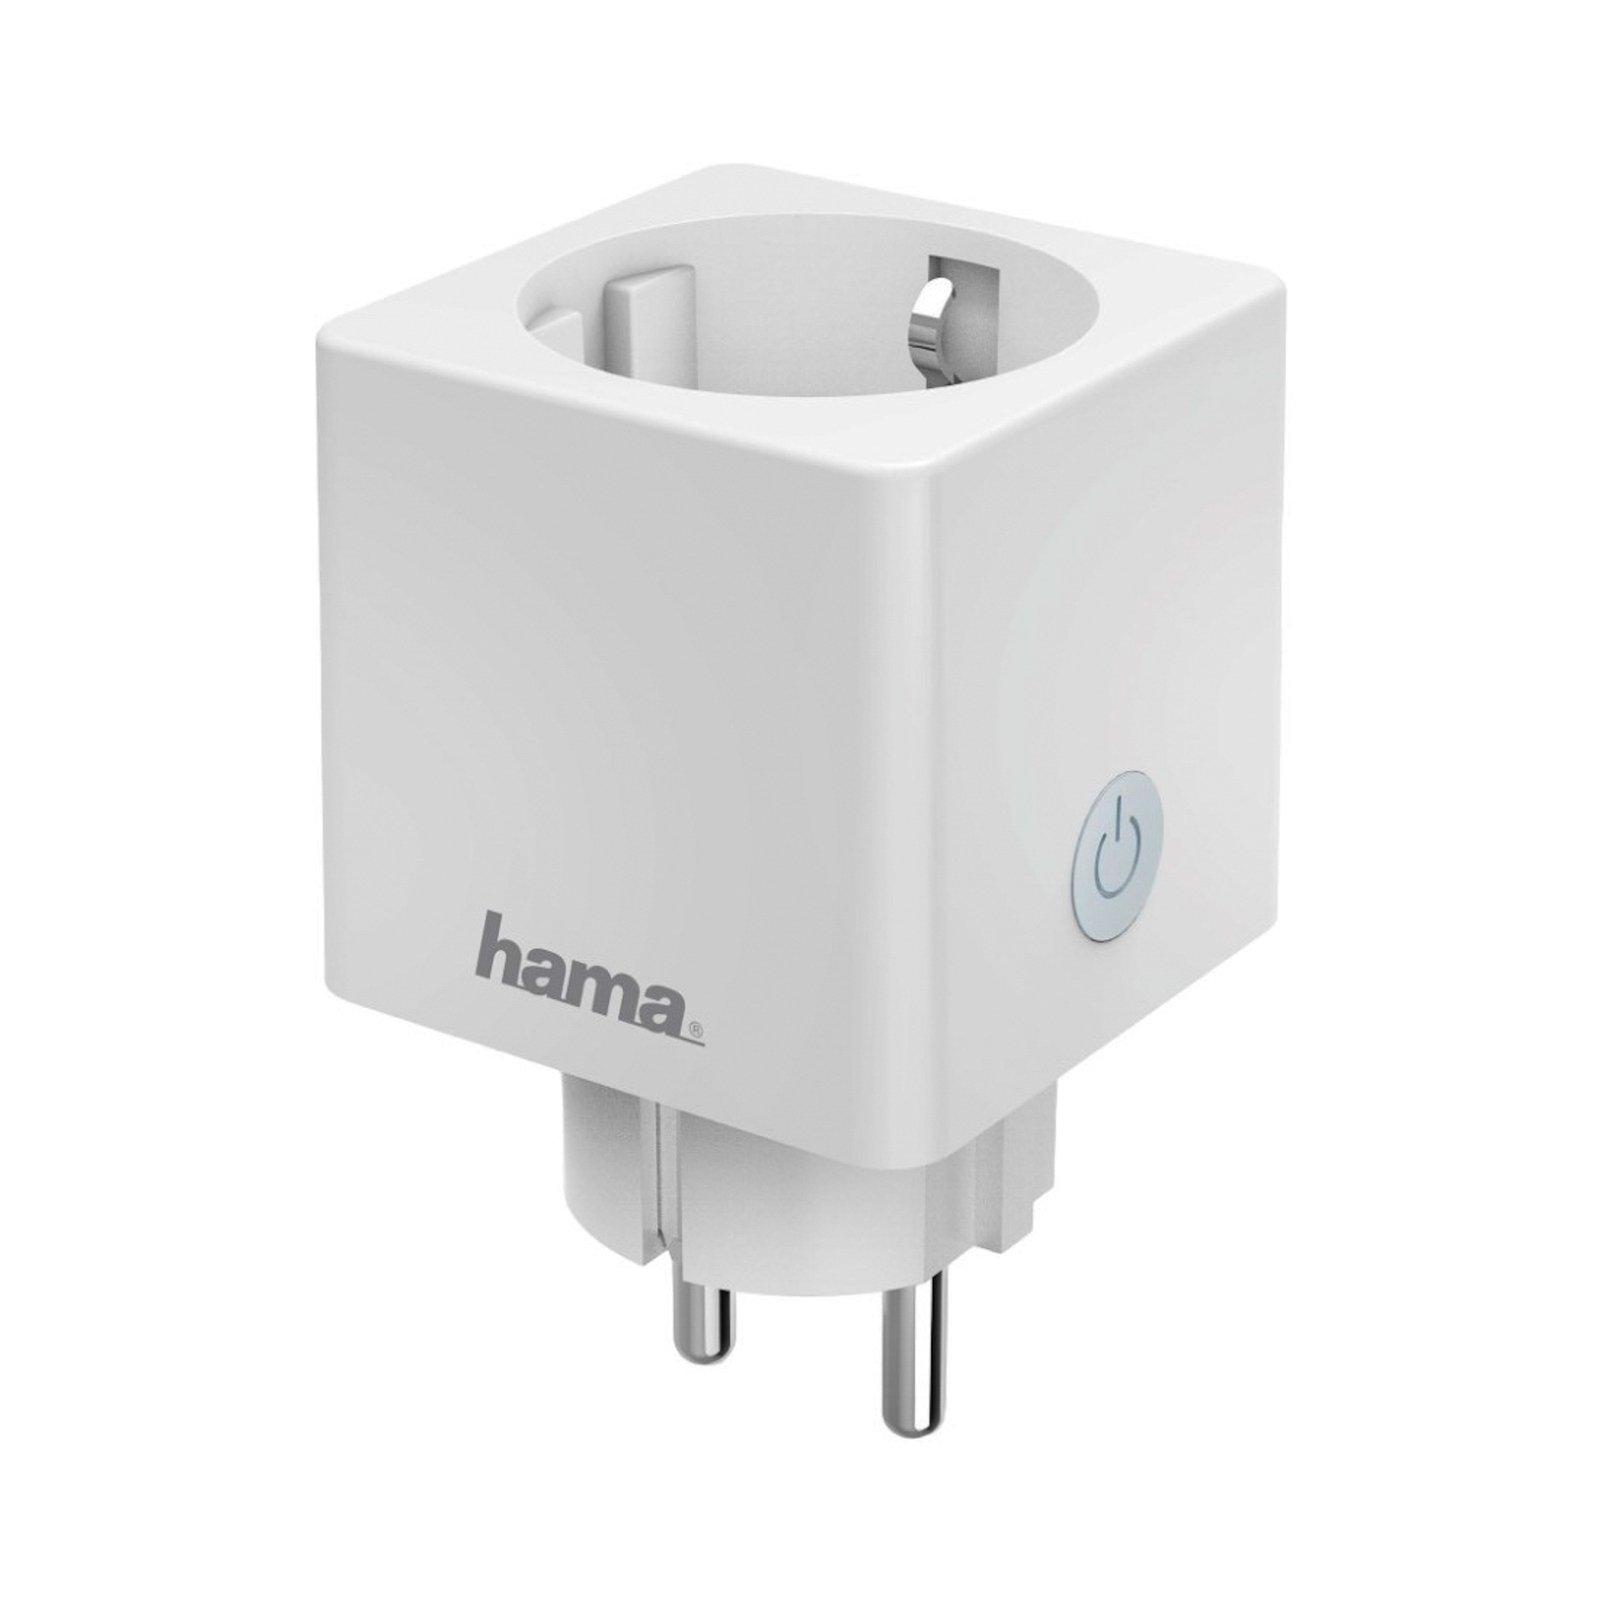 Hama Mini WLAN zásuvka elektromer aplikácia